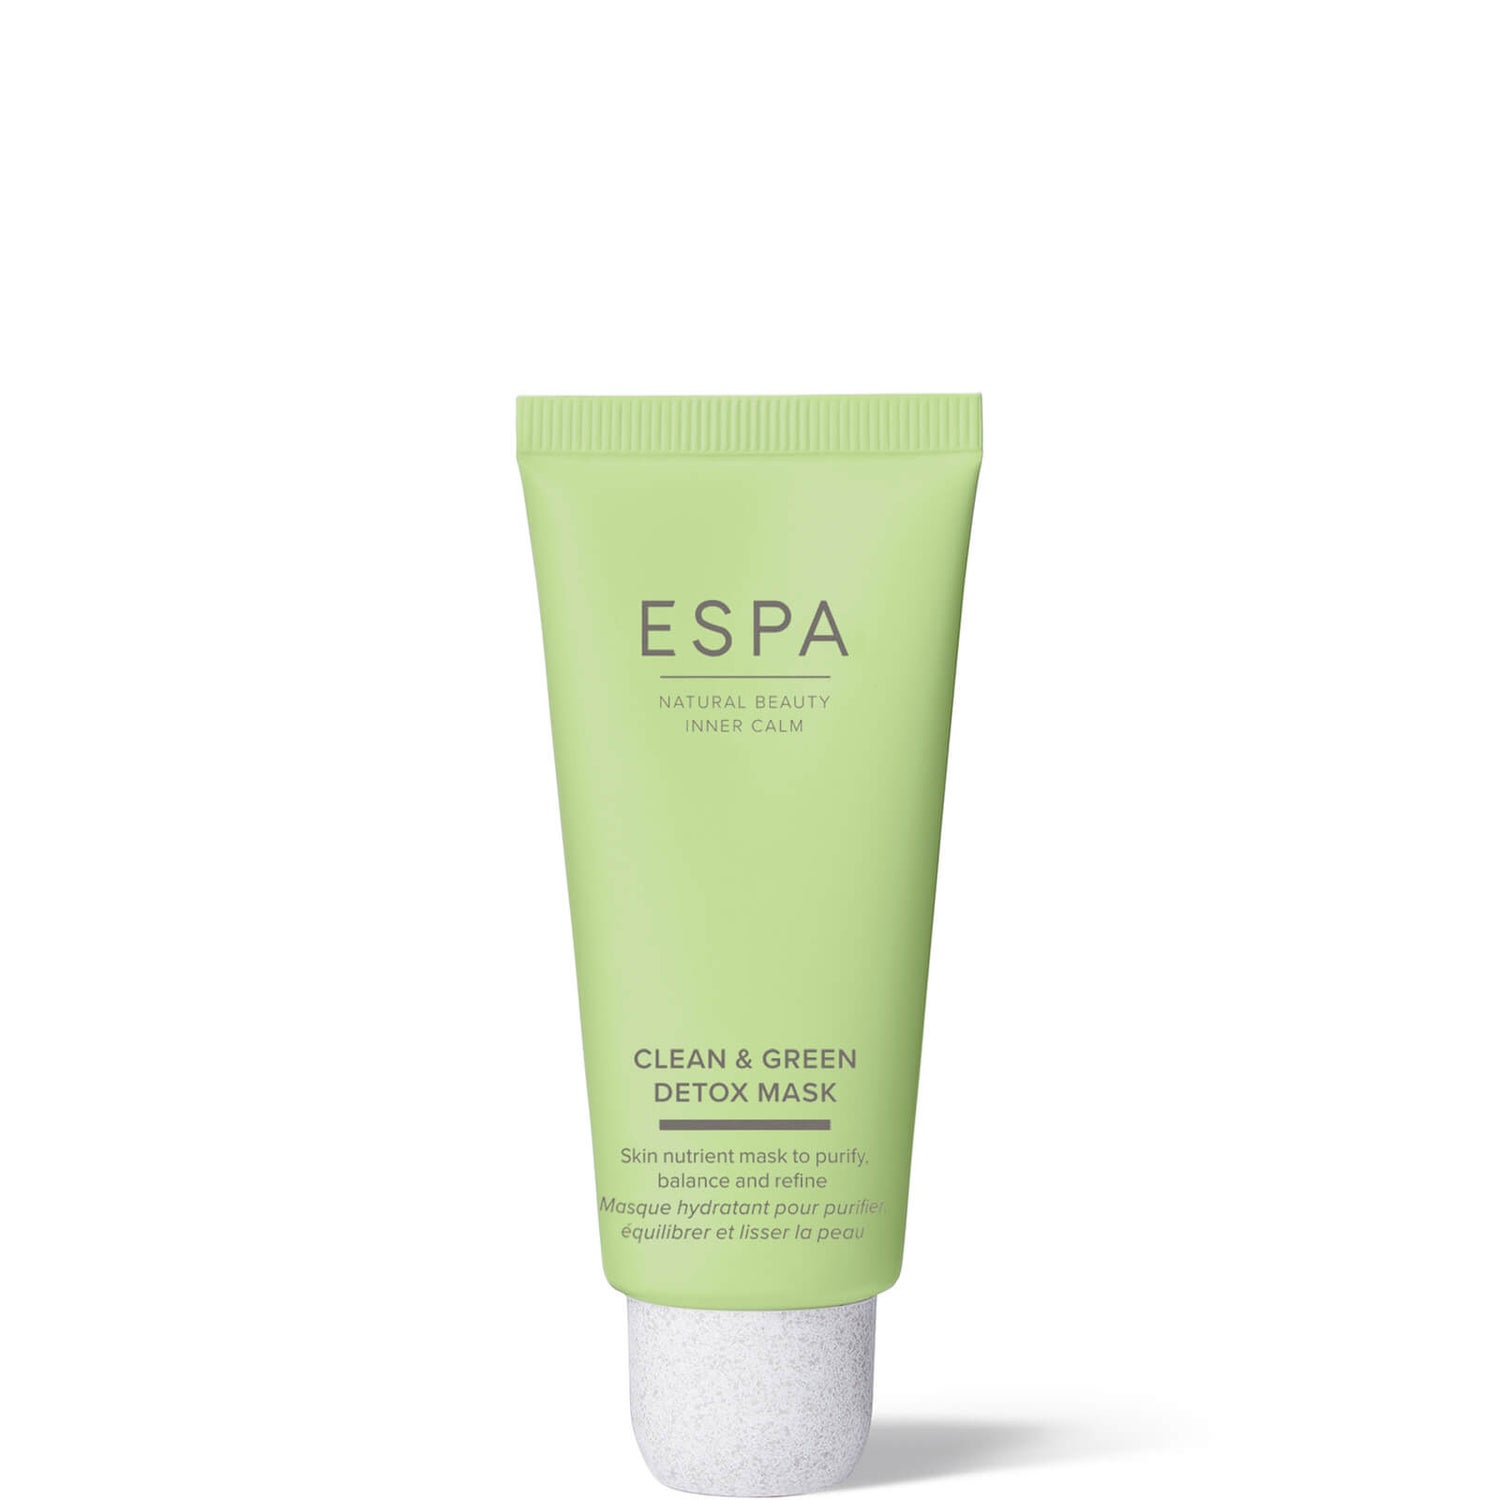 ESPA (Sample) Clean & Green Detox Mask 30ml